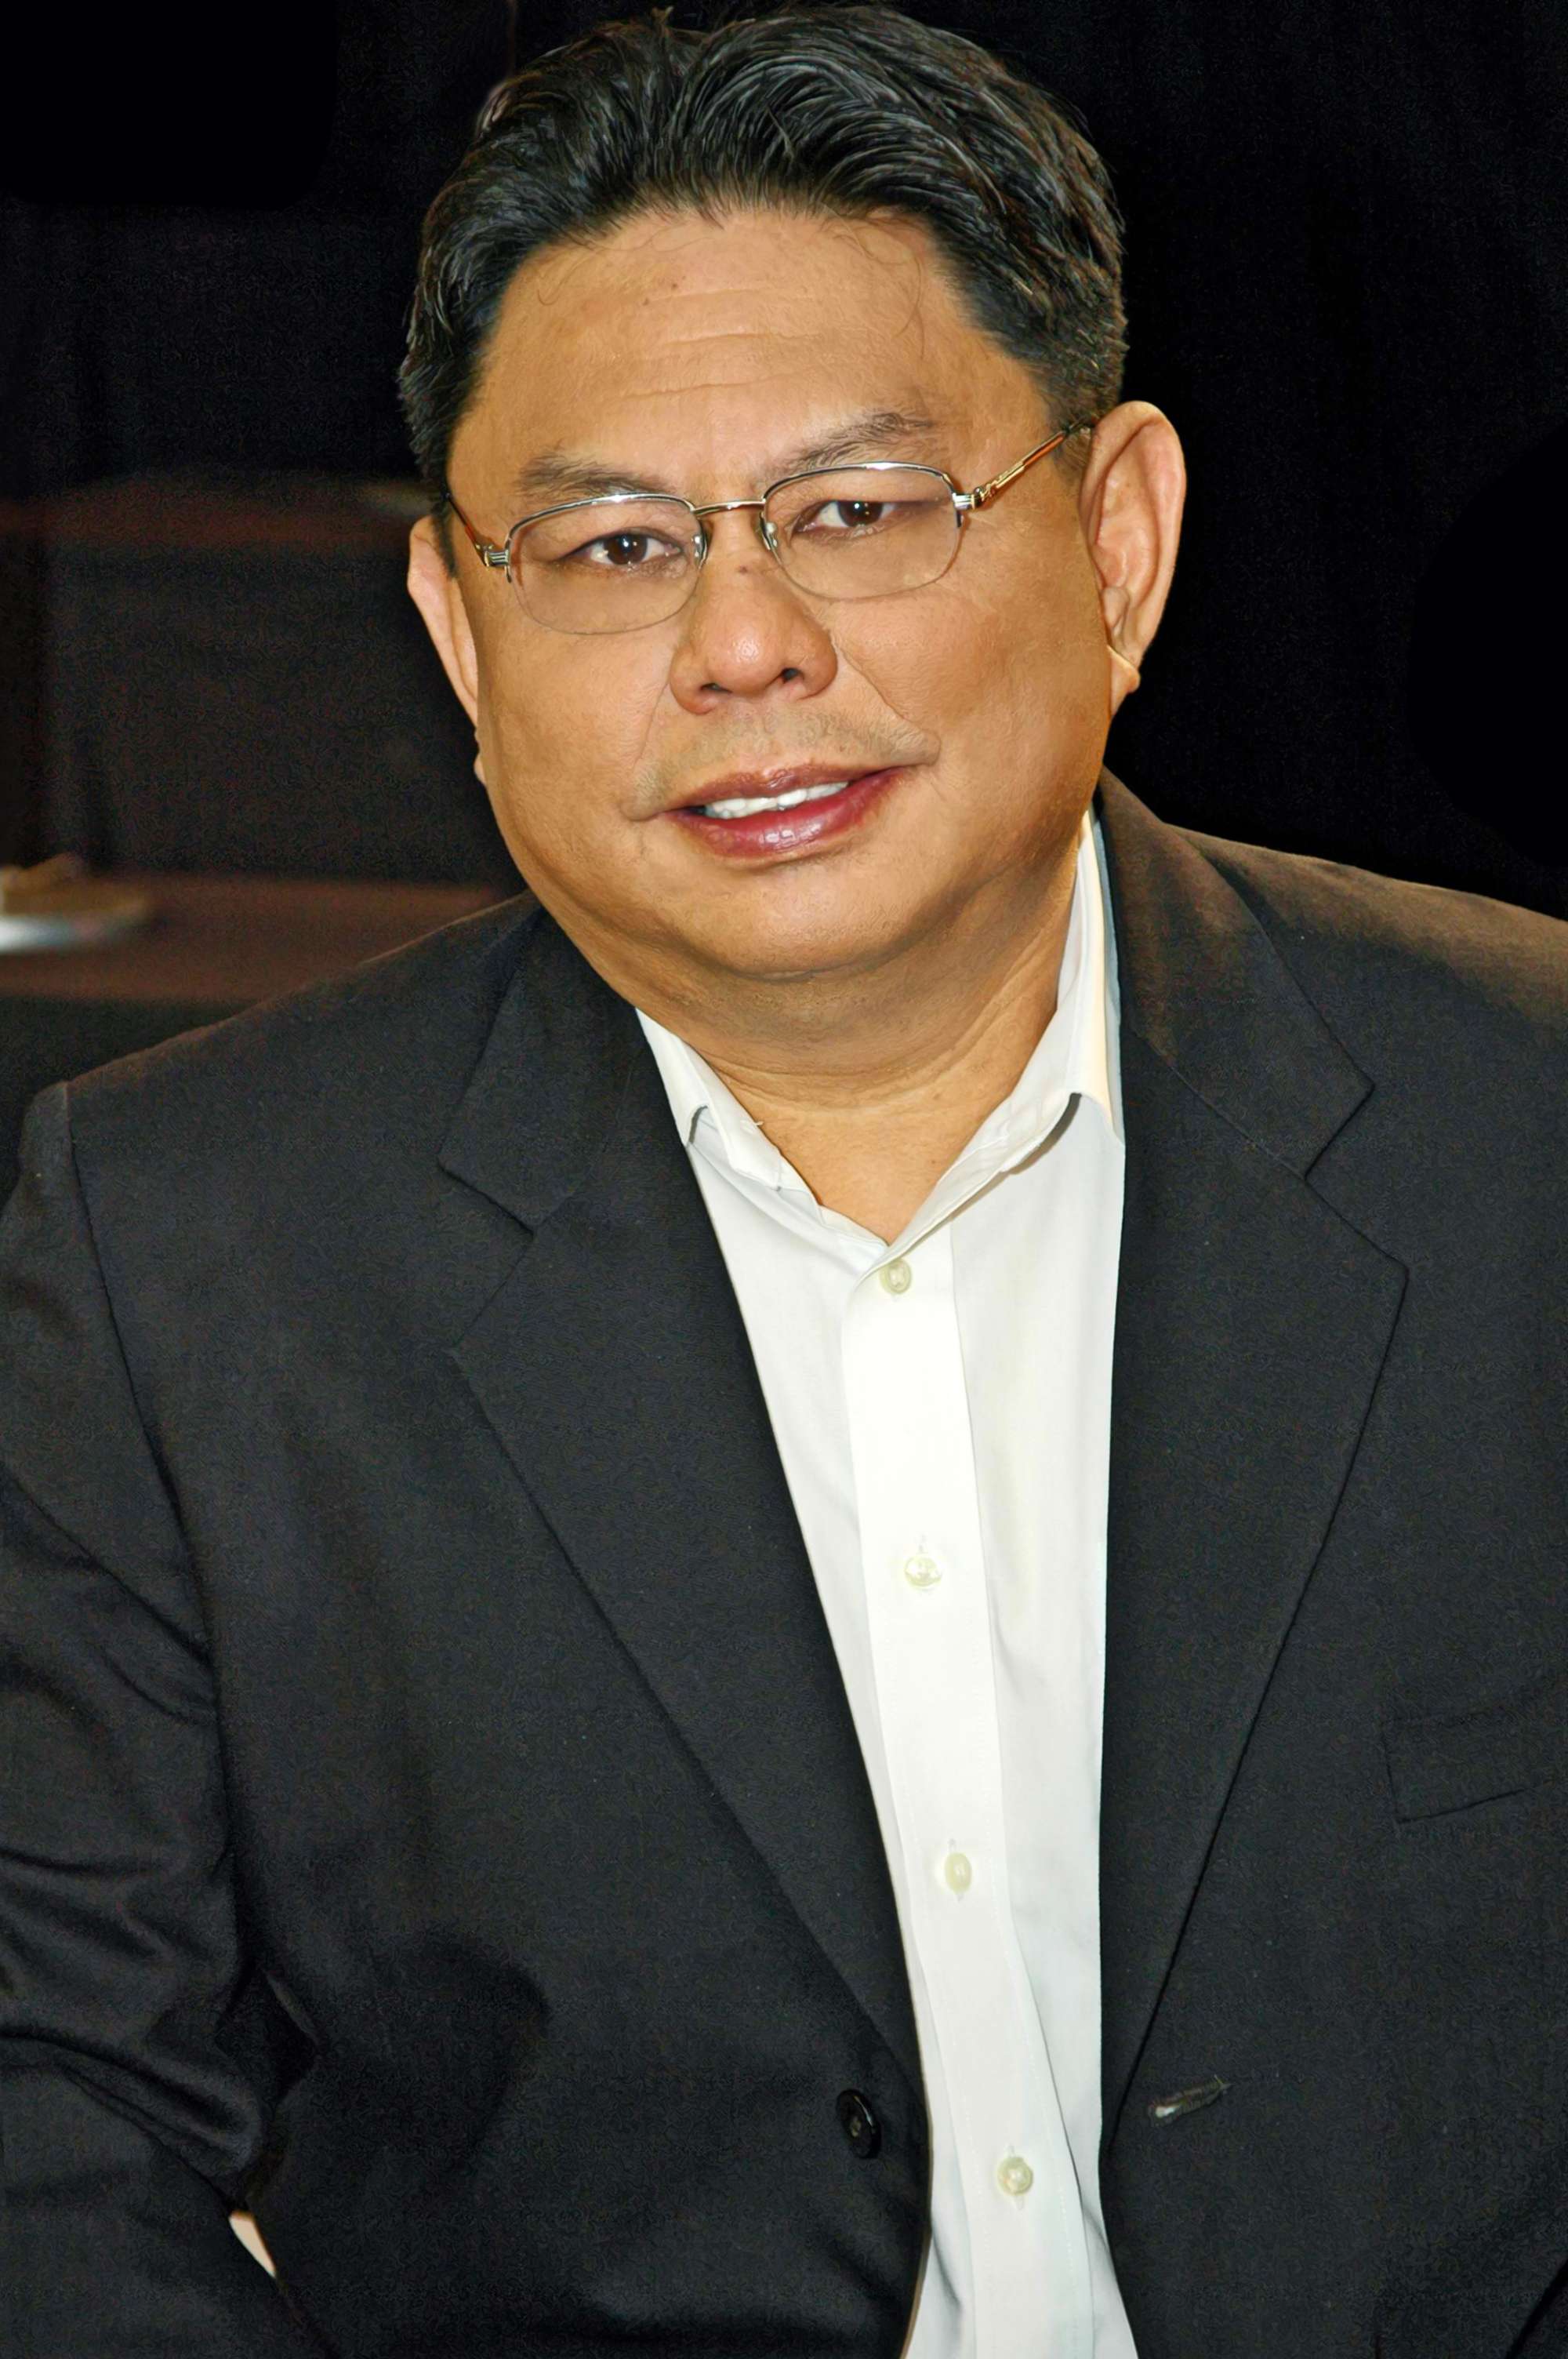 Dioceldo Sy, chairman